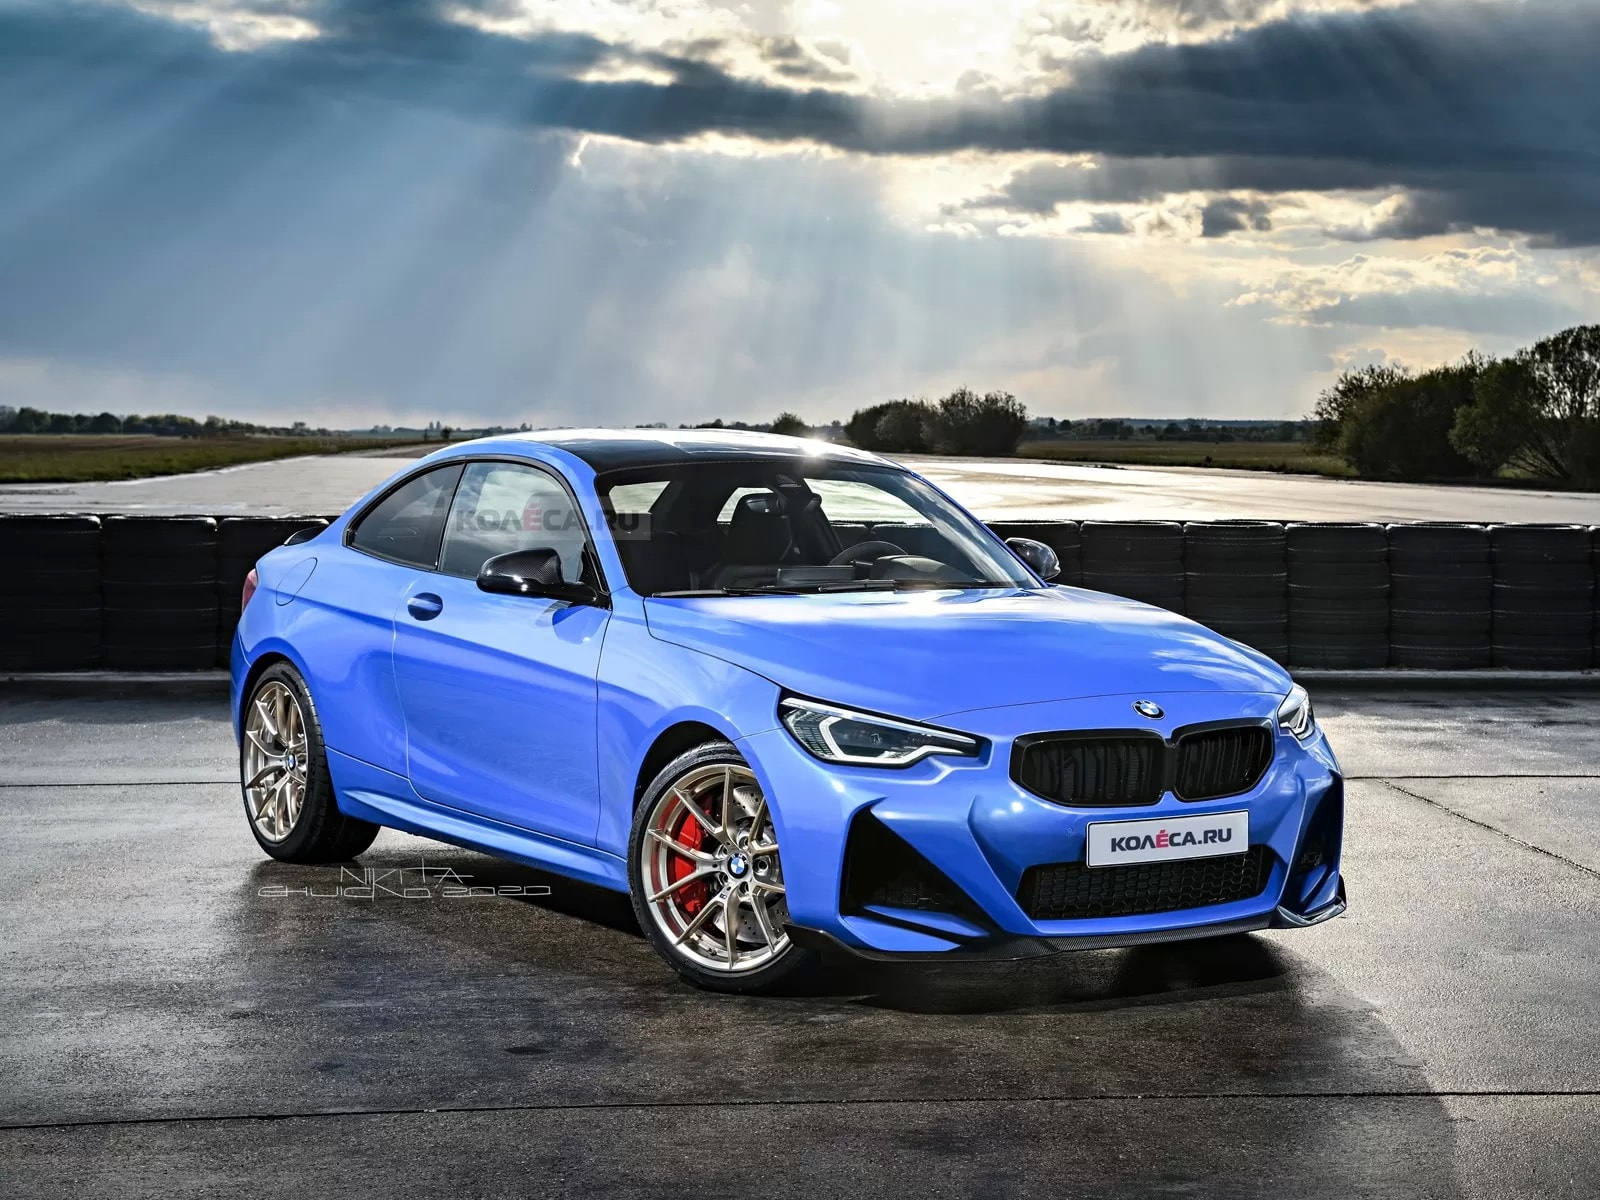 2022 BMW 2 Series Looks Real in Latest Rendering Based on Leaks